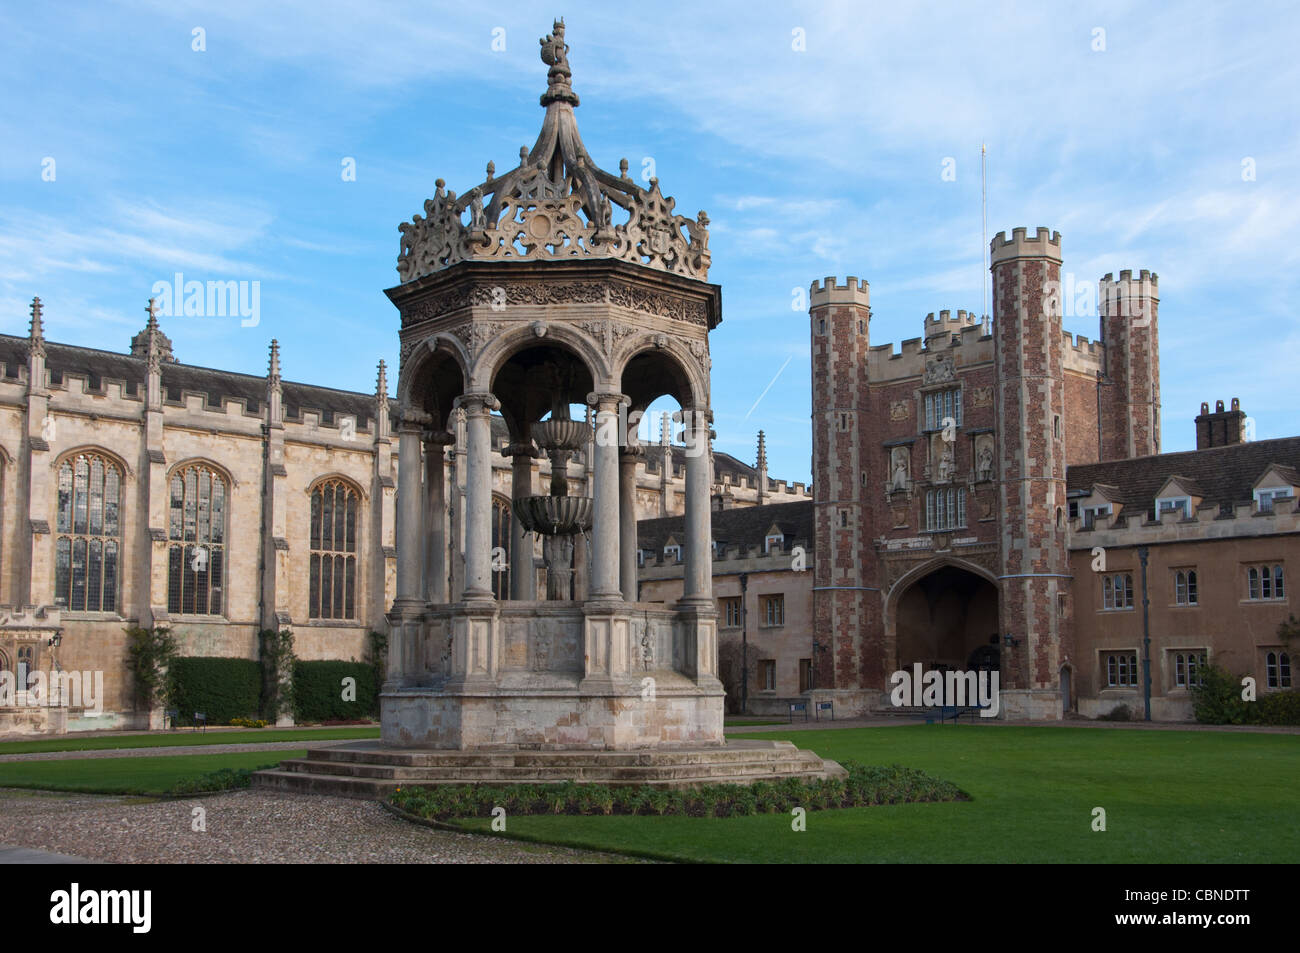 The Great Court Trinity College Cambridge England. Stock Photo